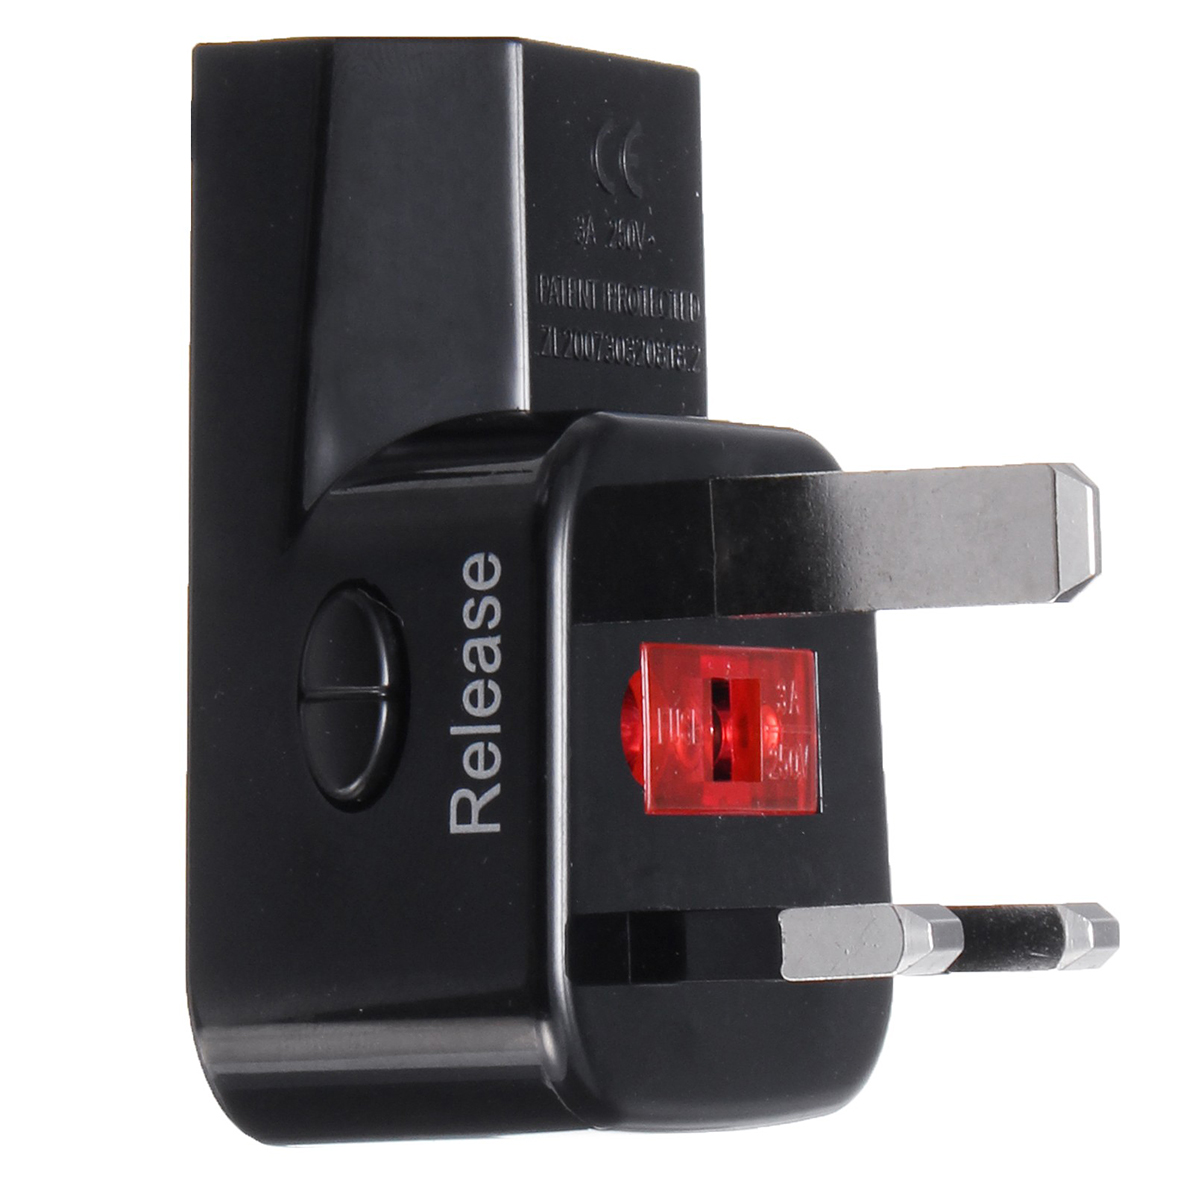 125-250V-USUKAUEU-Universal-World-Travel-Adapter-Plug-Dual-USB-Port-w-Surge-Protector-1286824-5